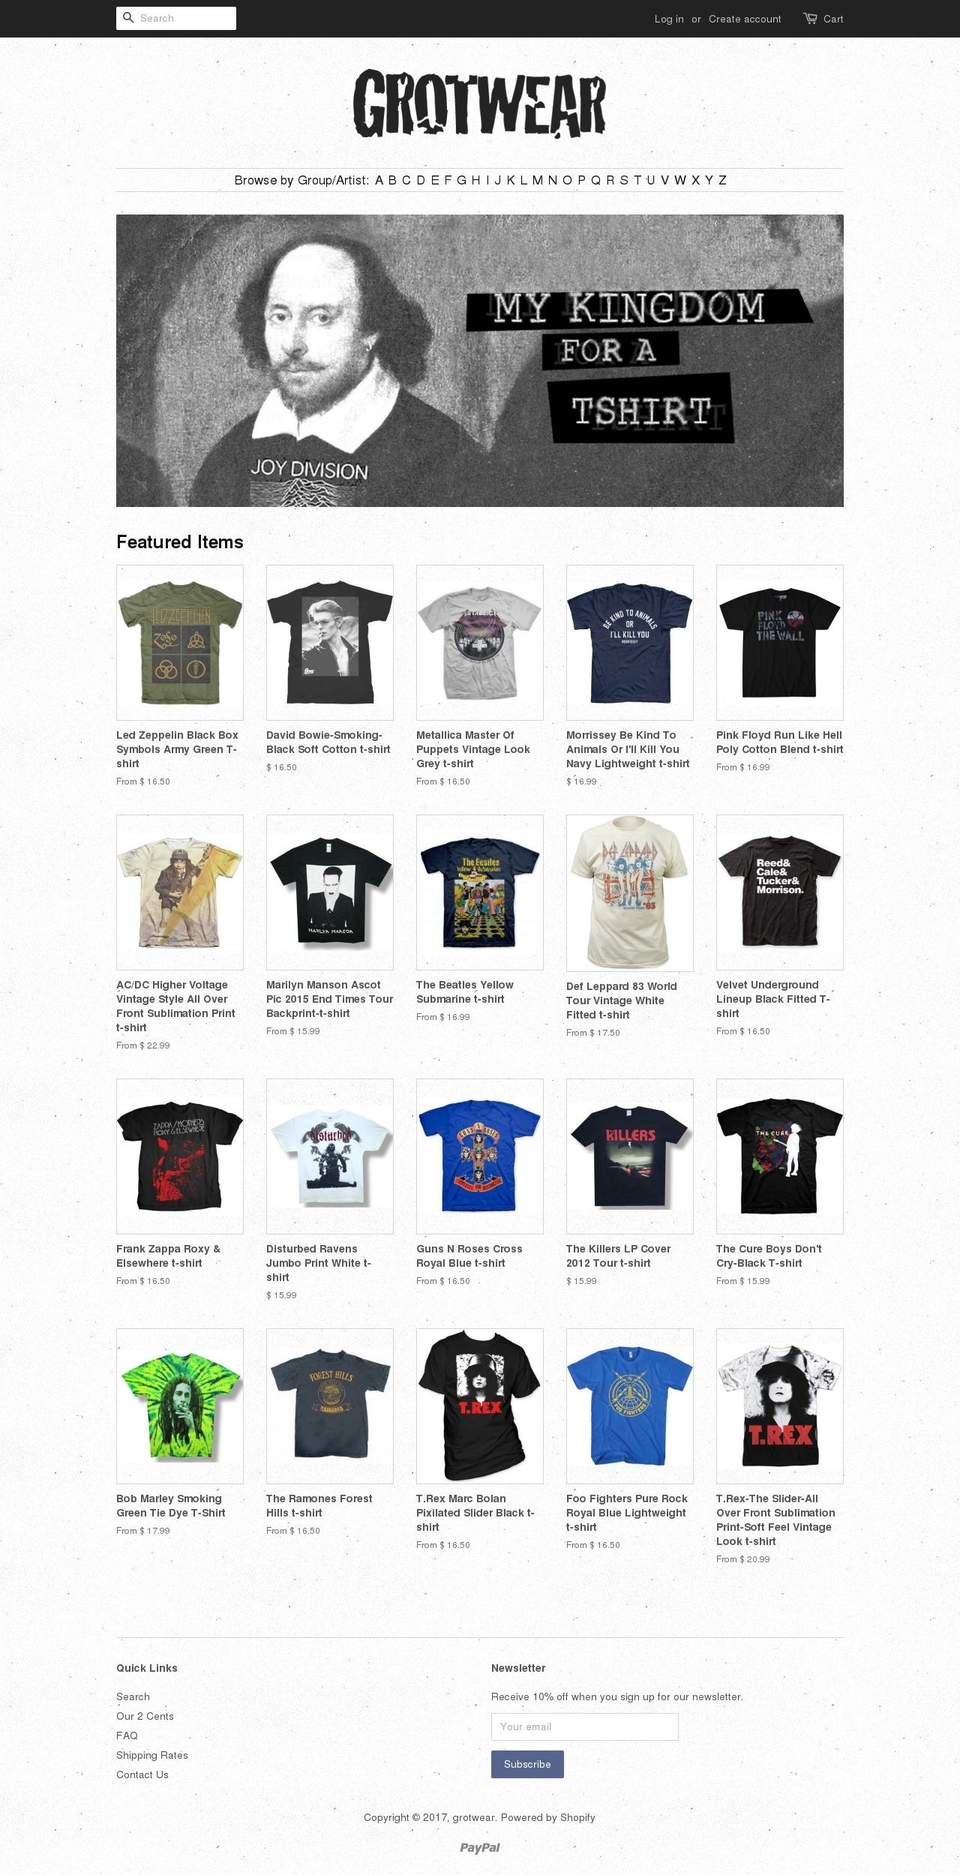 Banita Shopify theme site example grotwear.com